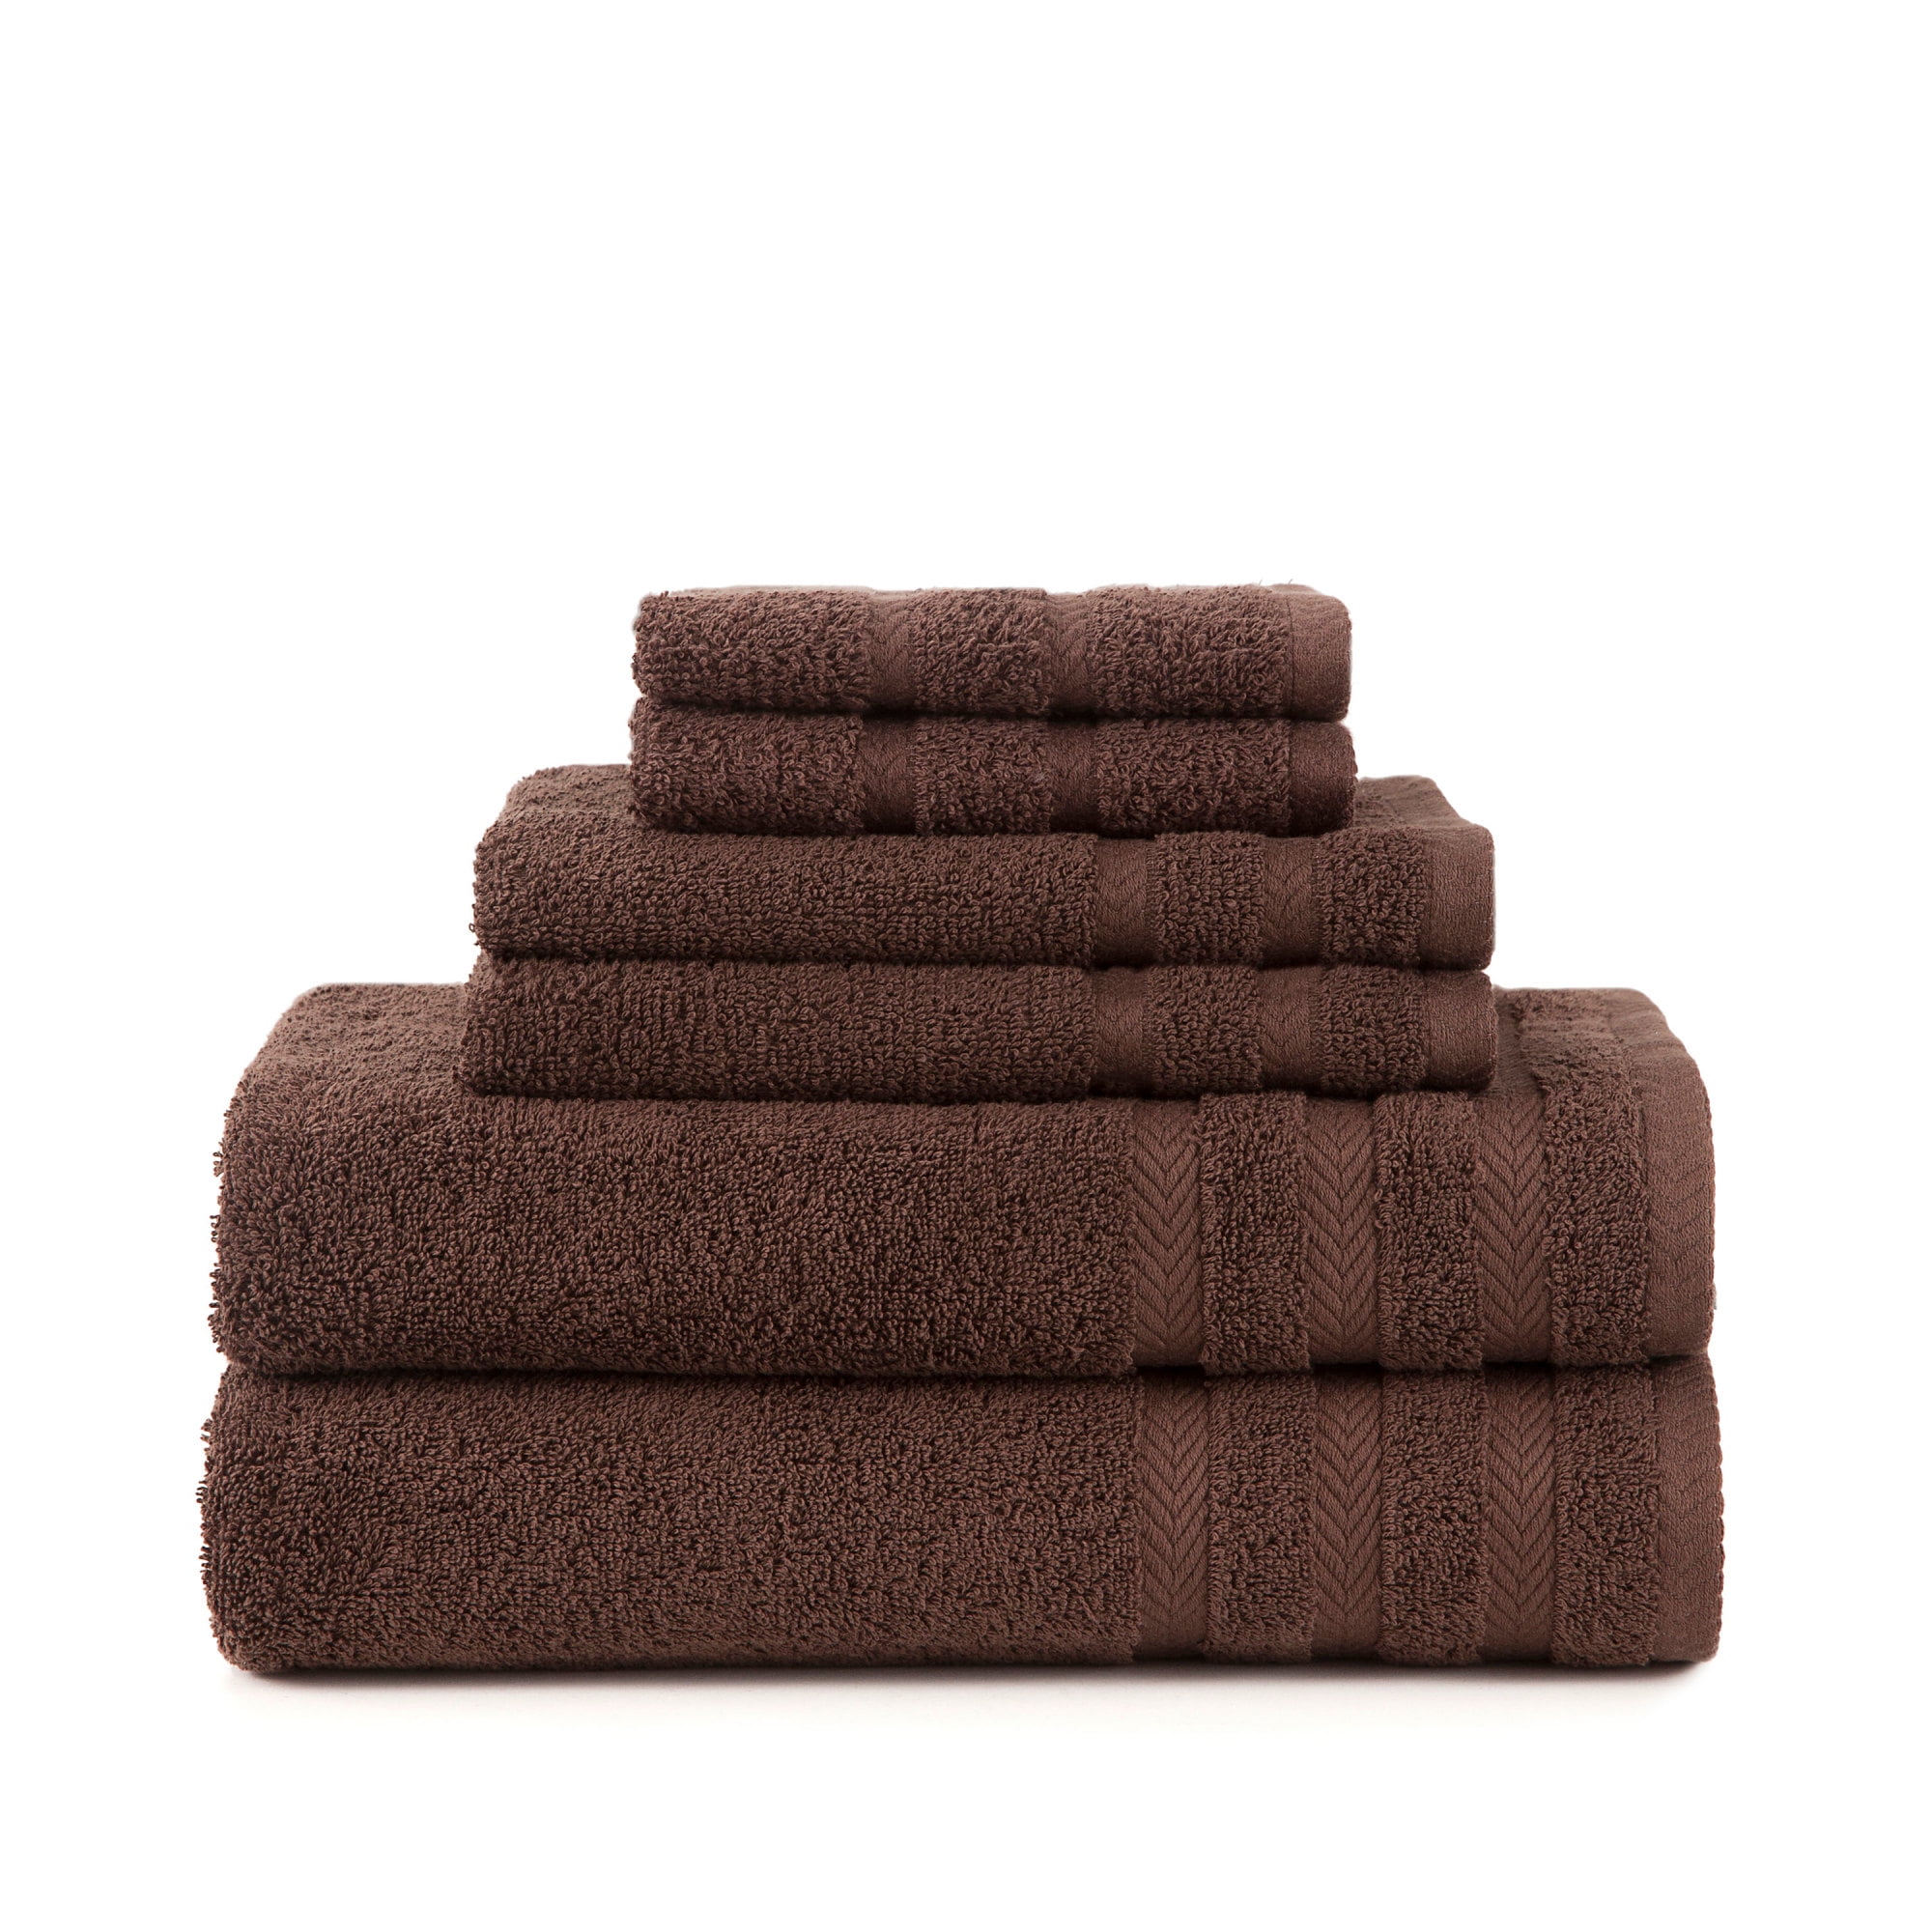 Egyptian Cotton With Dryfast 6 Piece Dark Brown Towel Set - Walmart.com